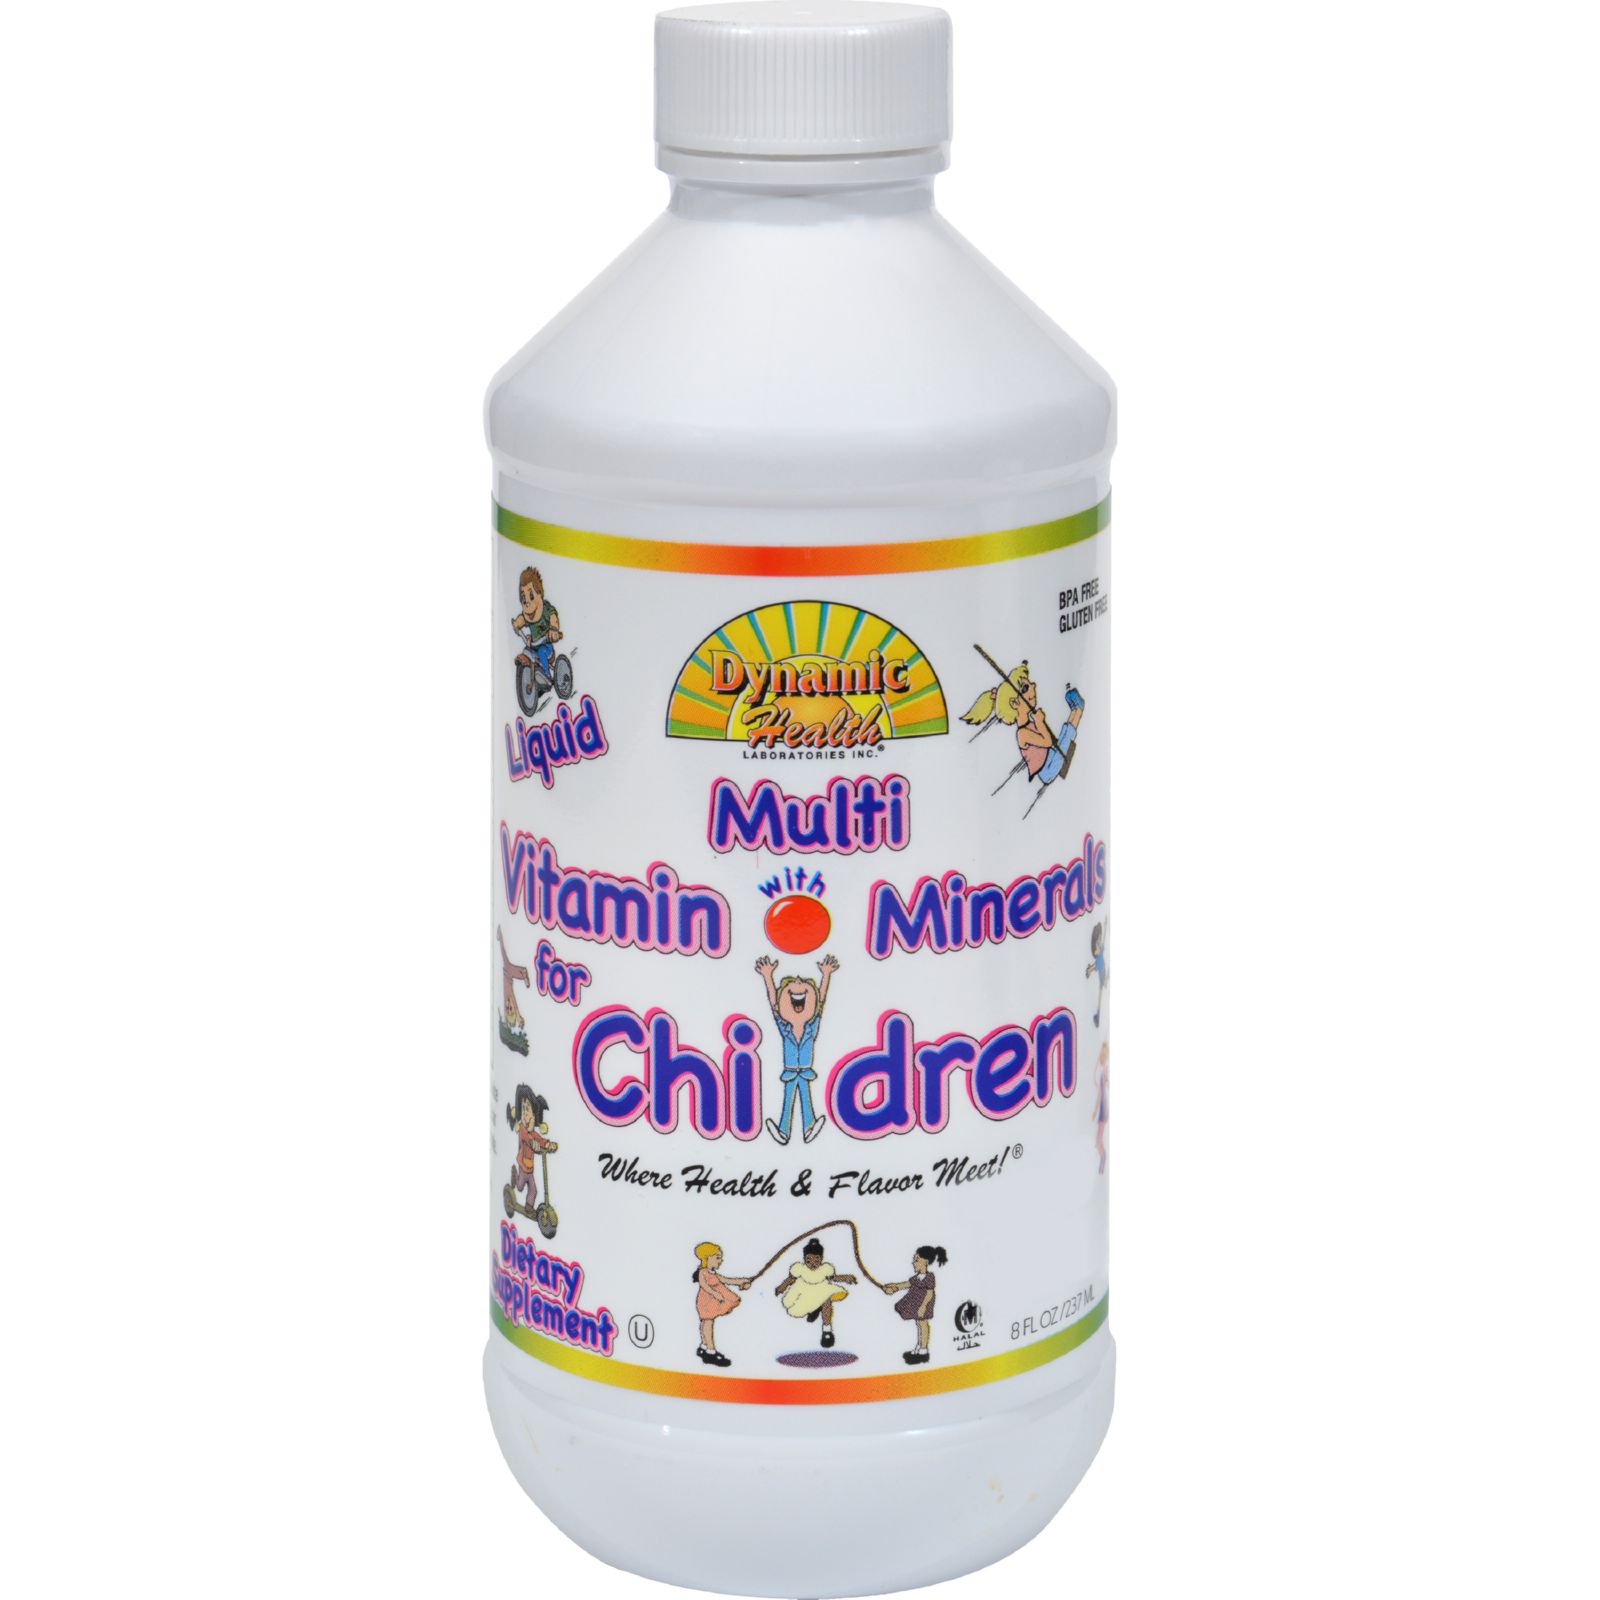 Dynamic Health Liquid Multivitamin w/ Minerals for Children | Great Taste Kids Love, W/ Vitamins A, C, D, B & More | No Gluten | 8 oz, Fruit Punch - image 1 of 2